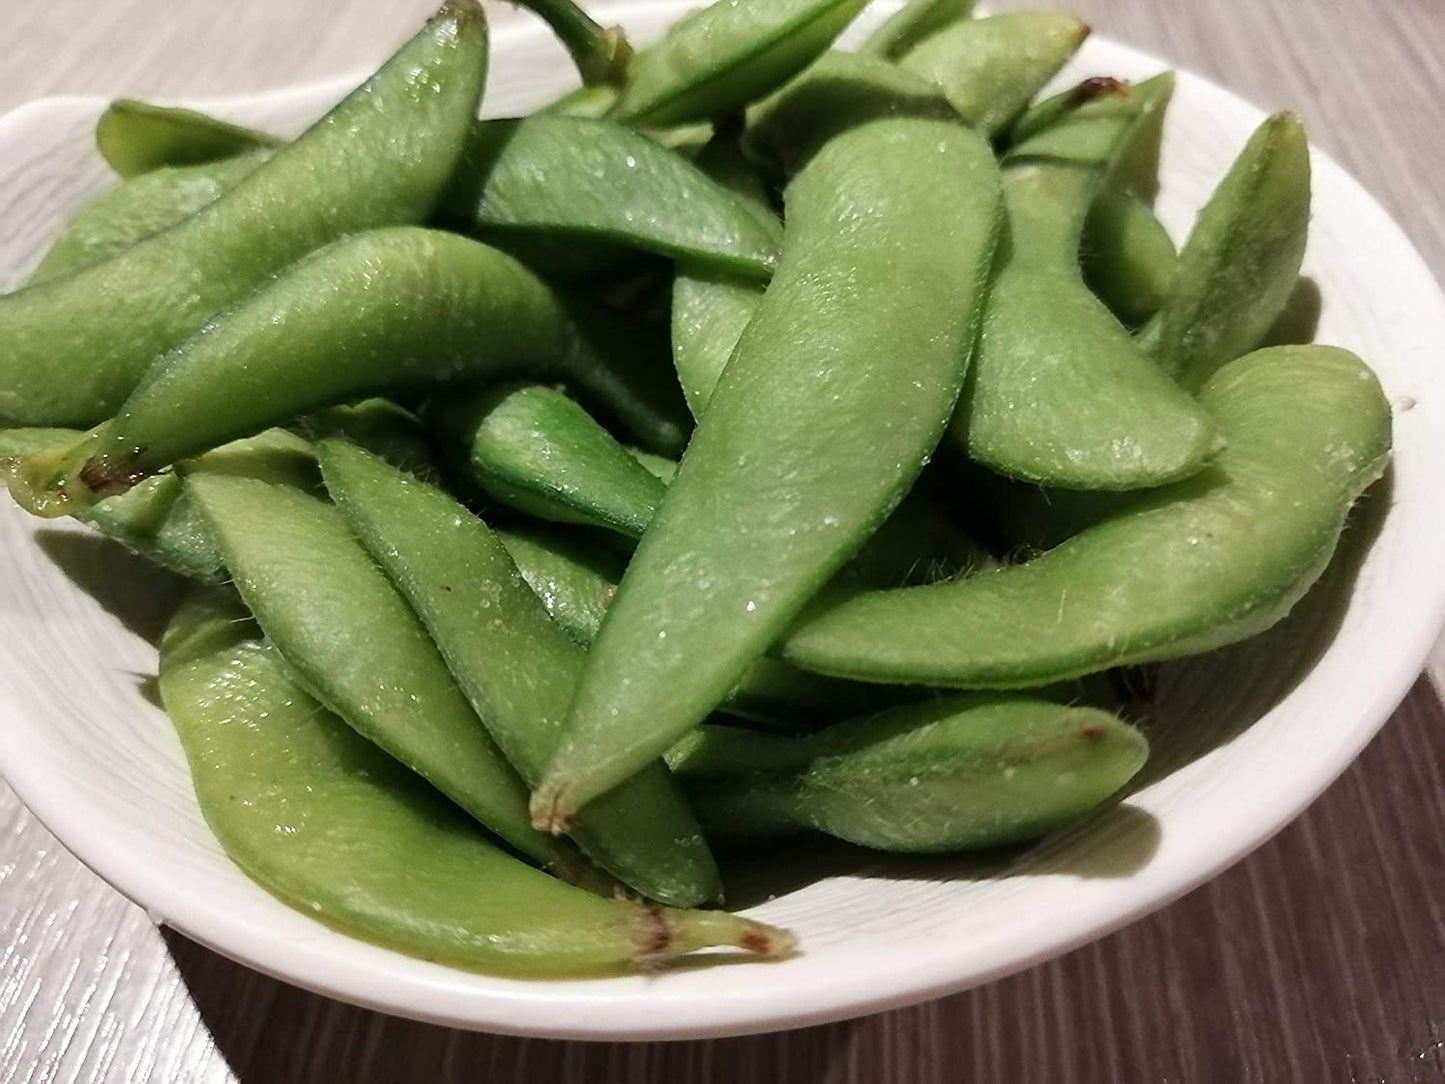 Hundredfold Non-GMO Organic Chiba Green Soy Bean 30 Seeds - Open-pollinated Soybean, Edamame Vegetable Seeds